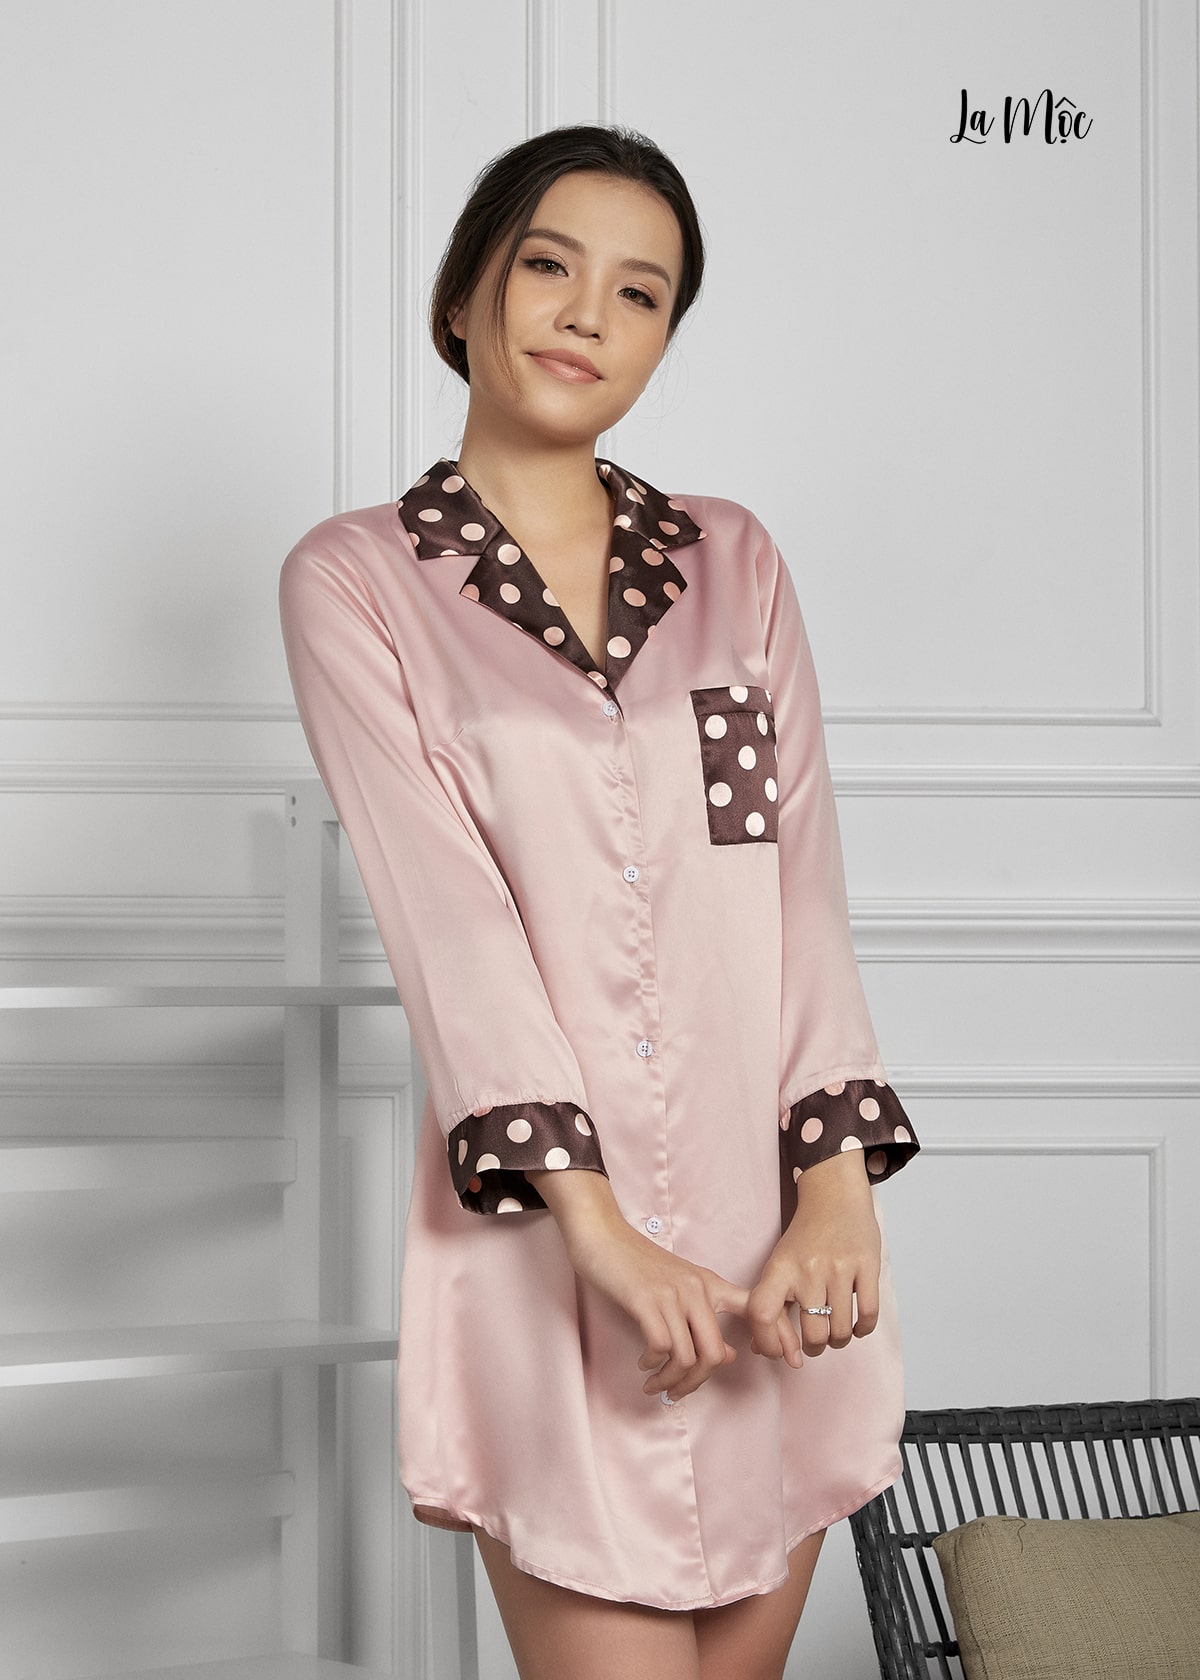 Đầm Pijama Lụa Hàn Cổ Bẻ Maxivic, La Mộc MM112120